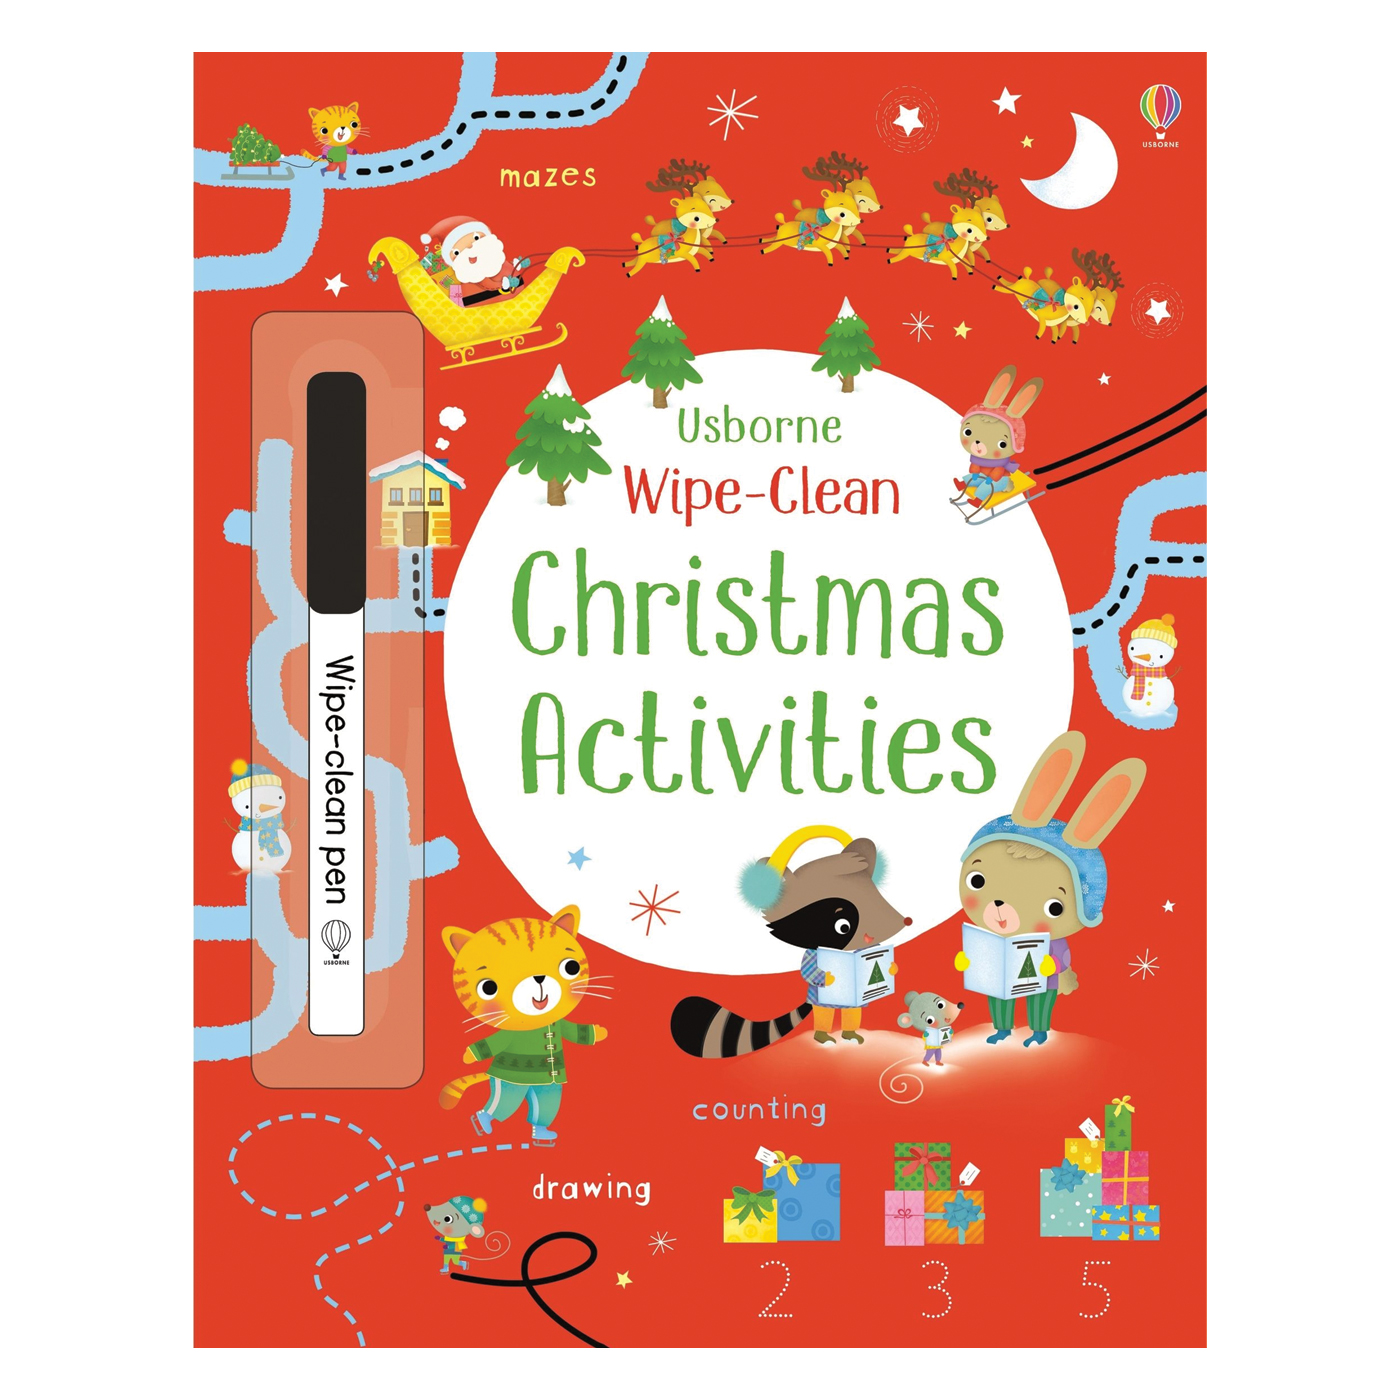  Wipe-Clean Christmas Activities